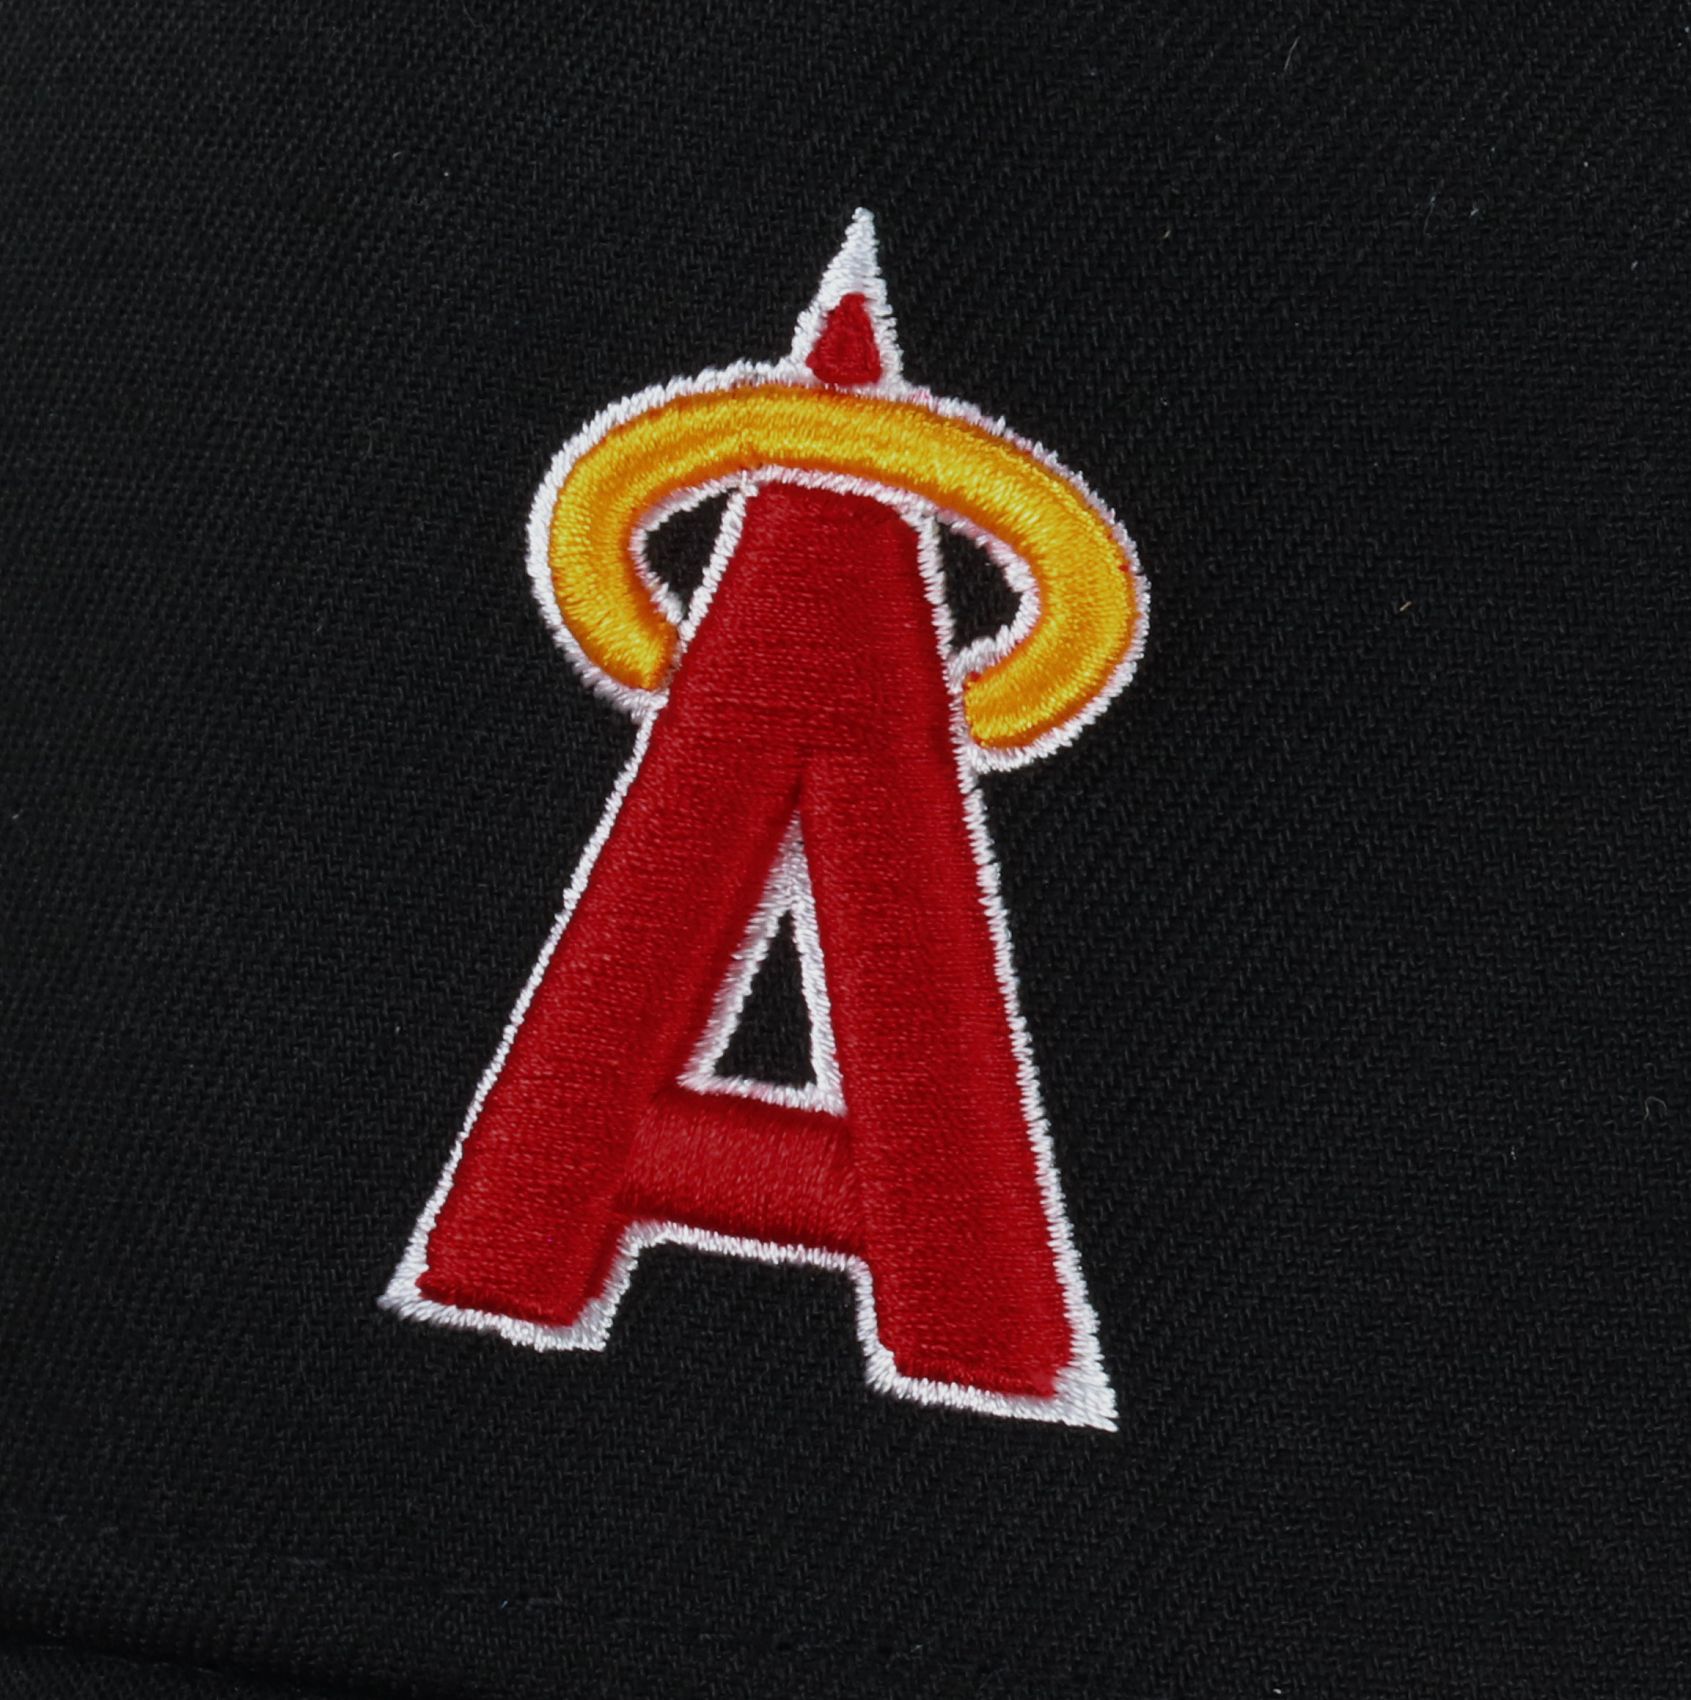 Los Angeles Angels MLB Black 9Forty A-Frame Adjustable Cap New Era